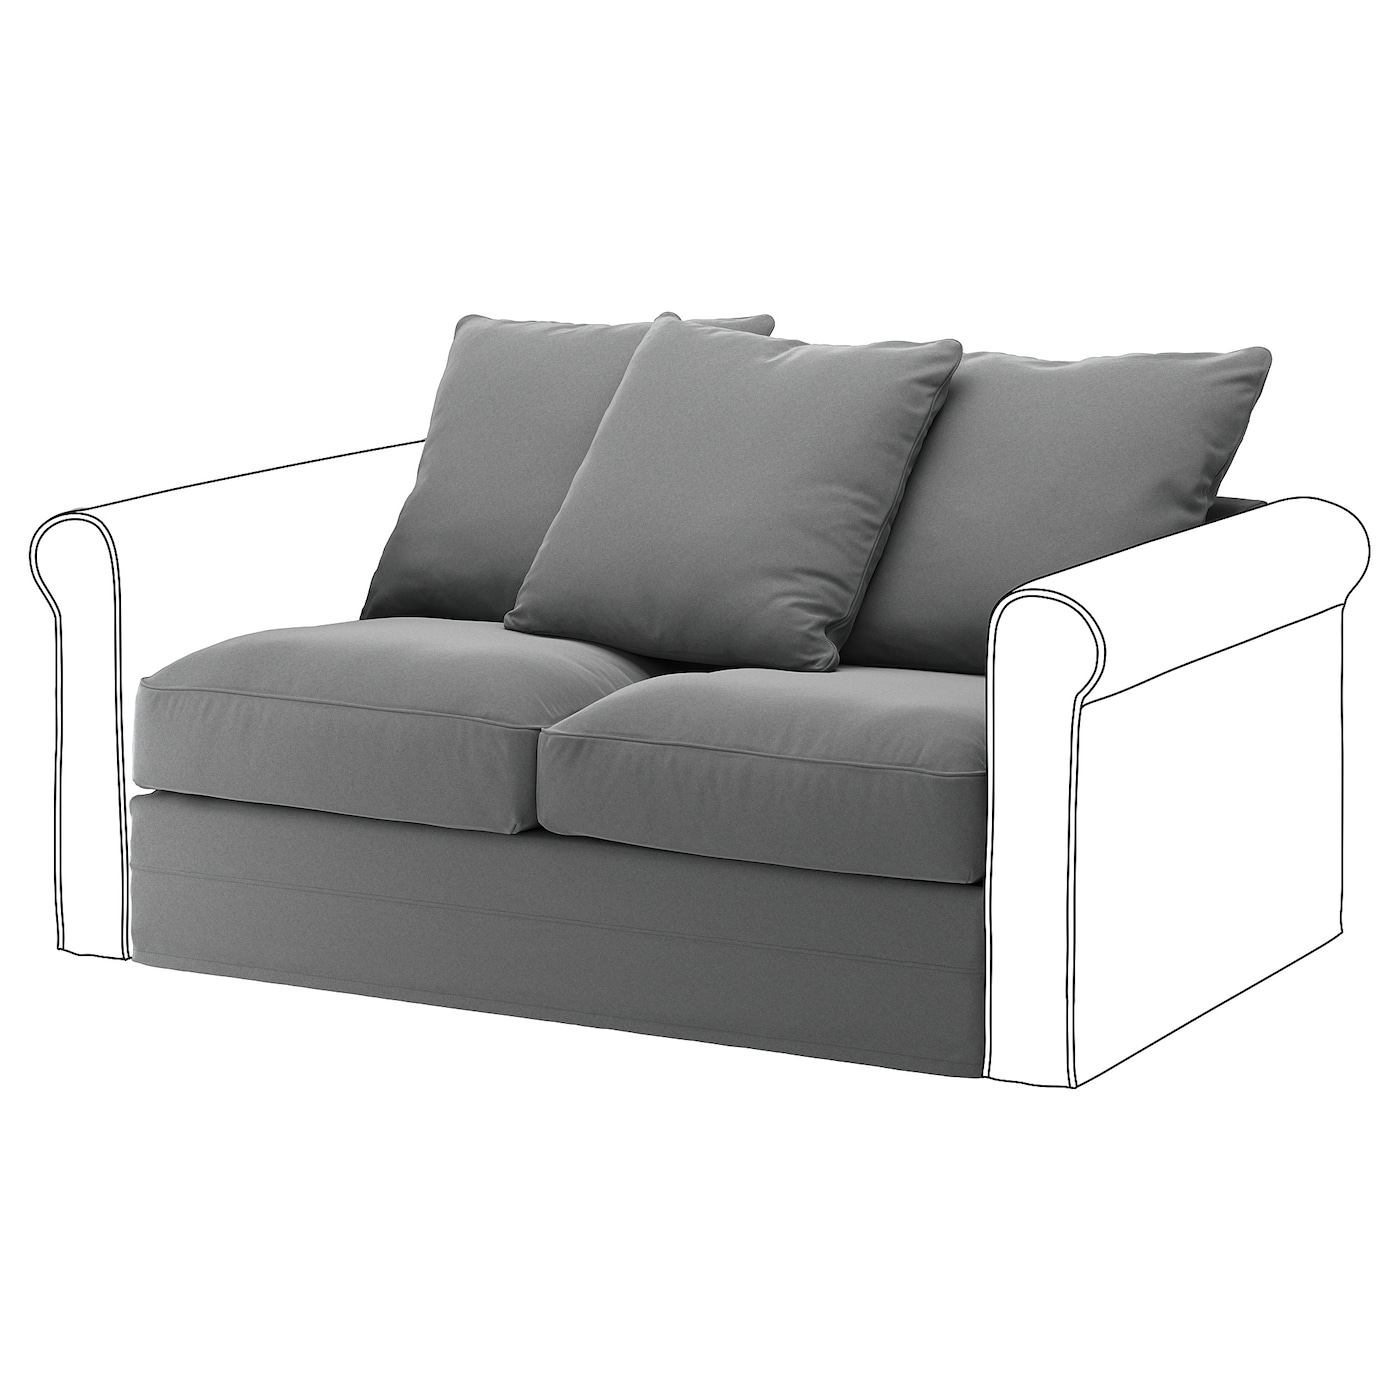 ГРЁНЛИД 2 раскладывающийся диван, Льюнге средний серый GRÖNLID IKEA